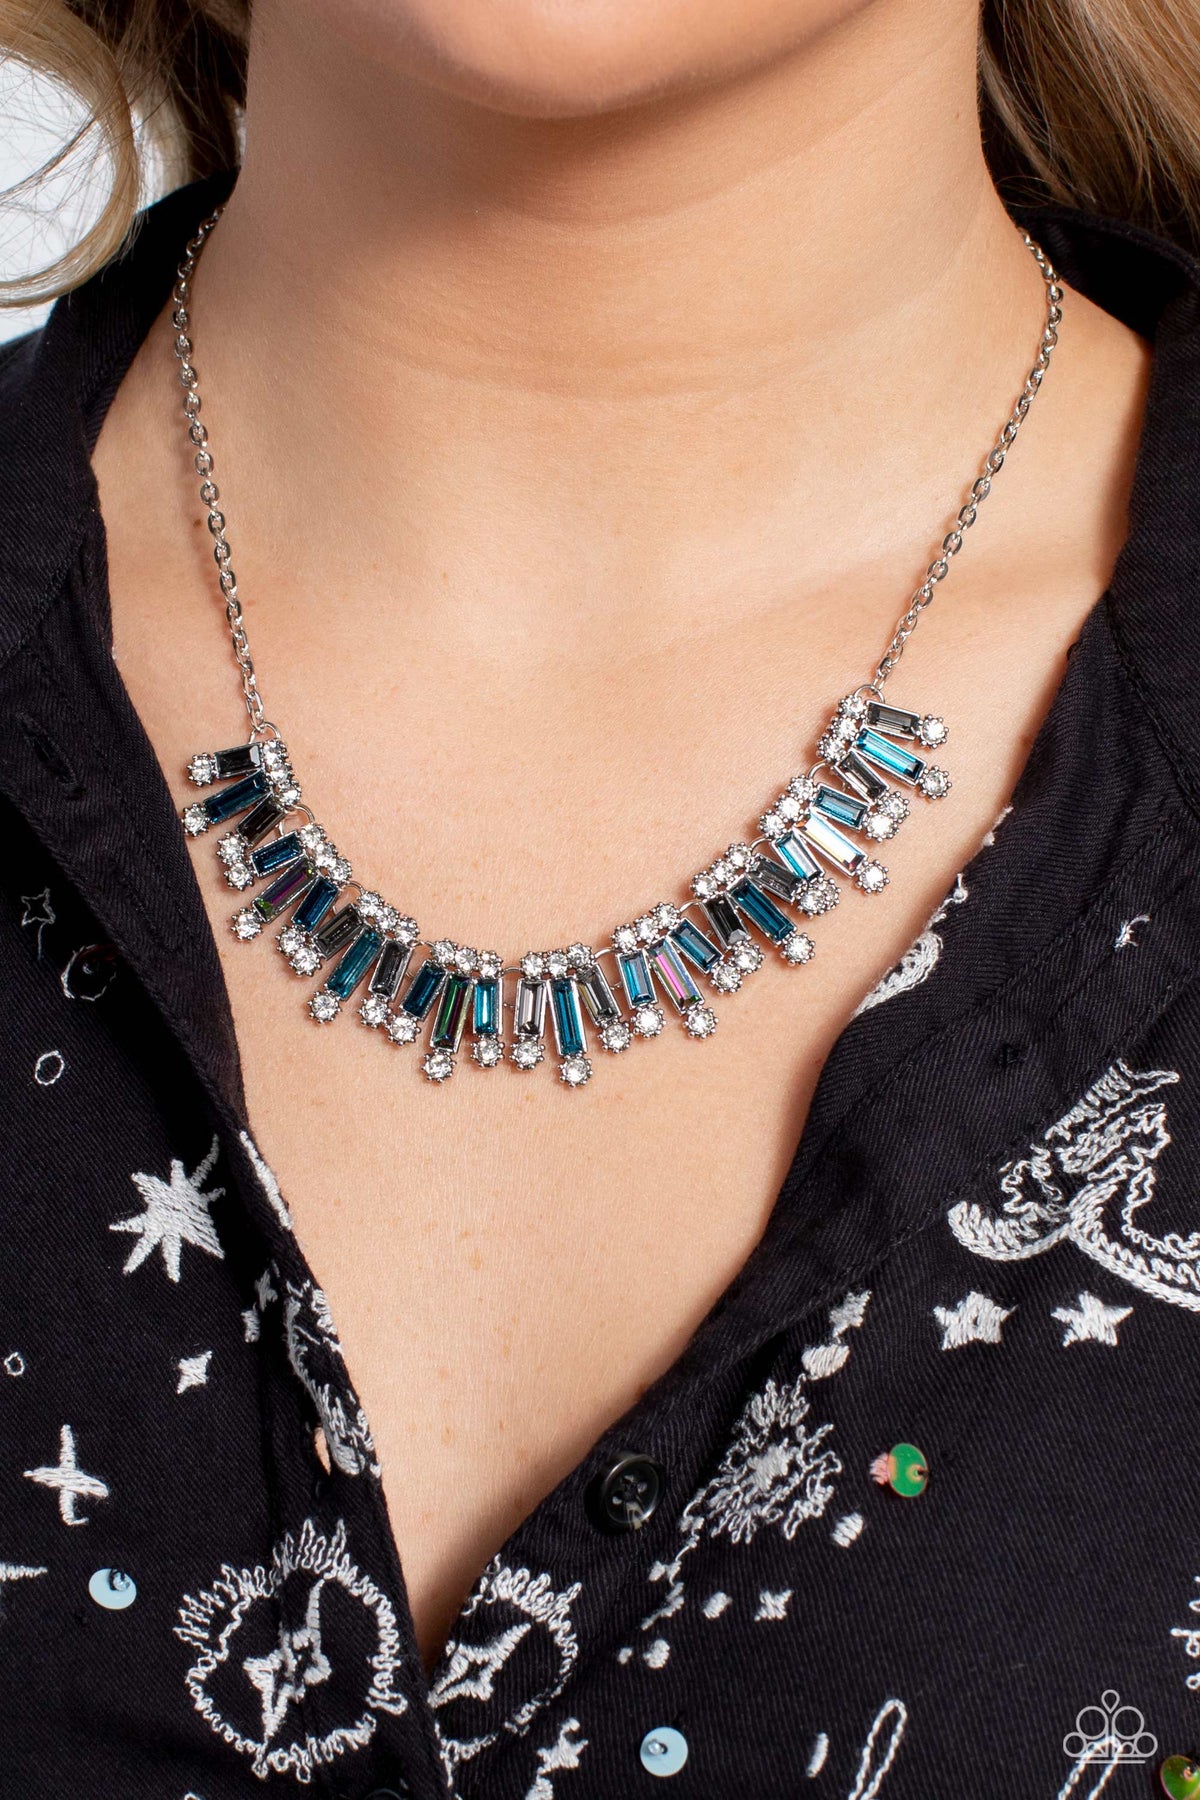 Sunburst Season Multi Necklace - Paparazzi Accessories-on model - CarasShop.com - $5 Jewelry by Cara Jewels